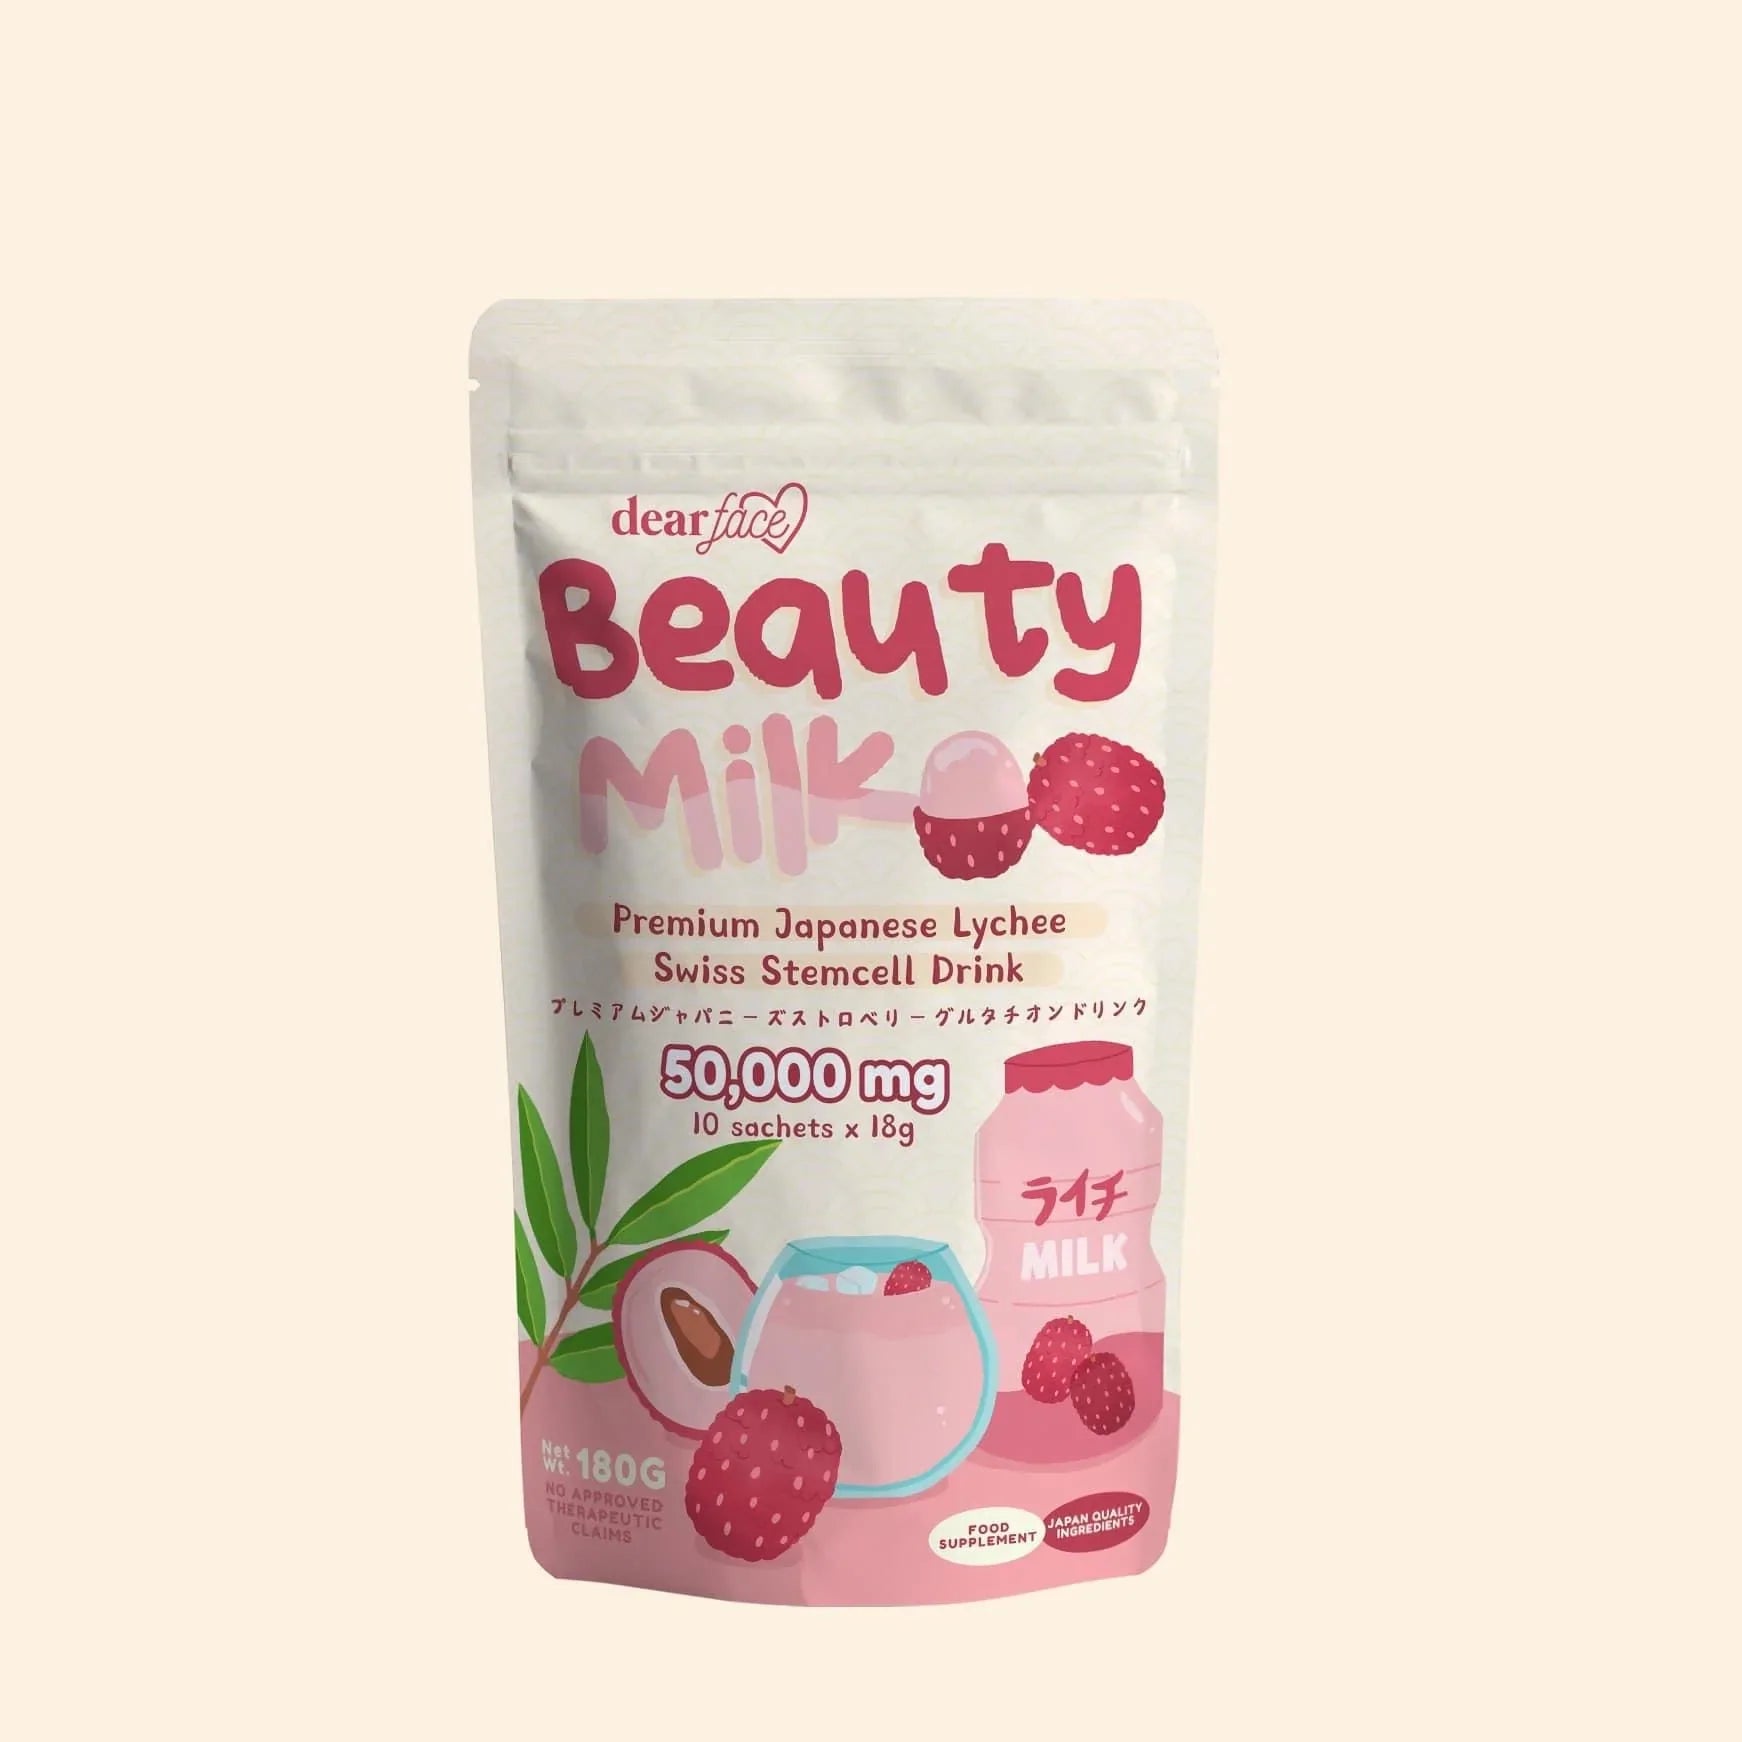 Dear Face Beauty Milk Premium Japanese Lychee